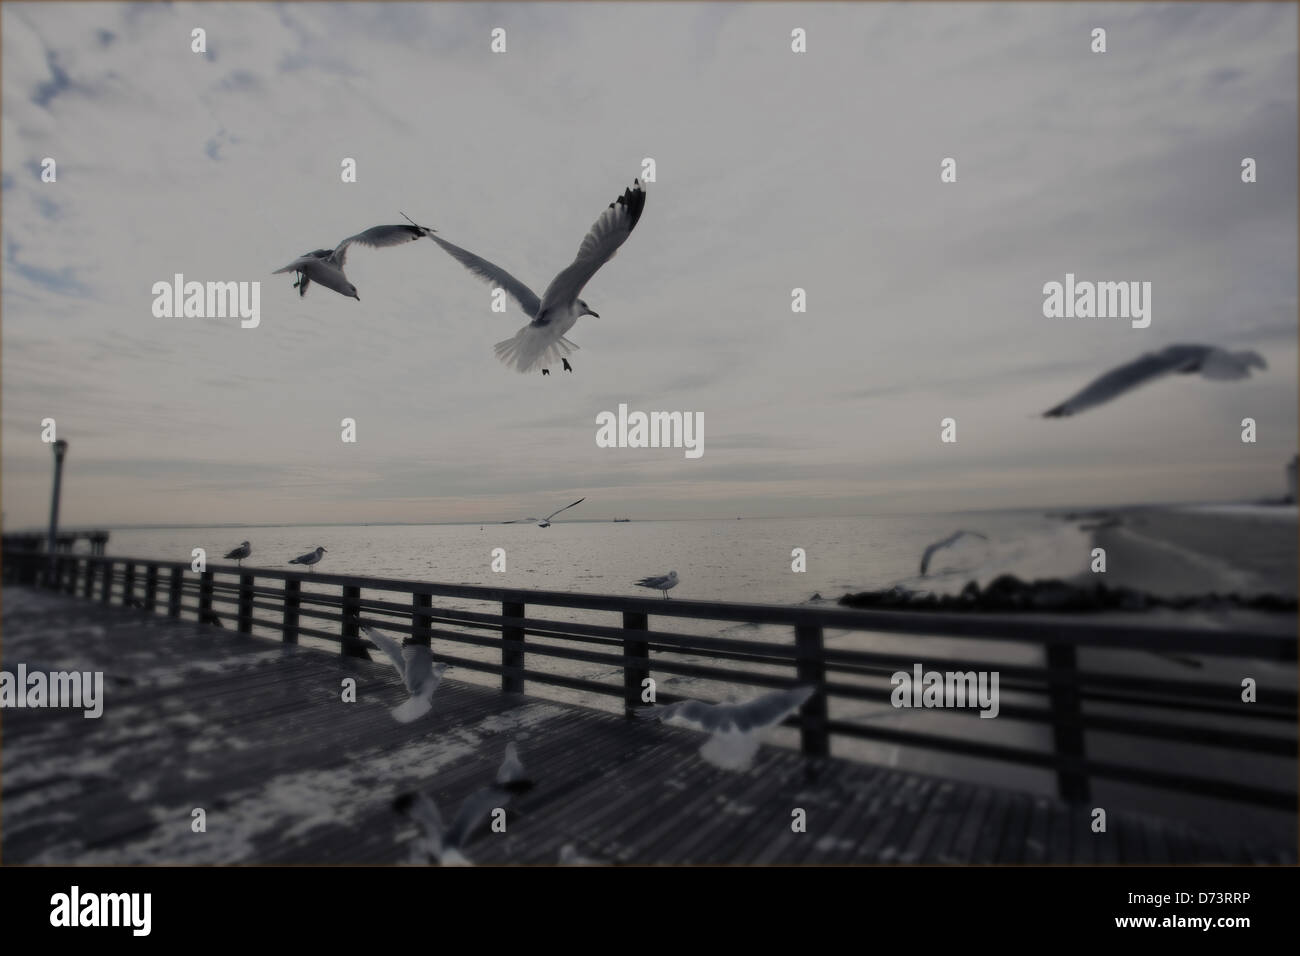 Seagulls flying, birds, landscape, cloudy, sadness, Coney Island Stock Photo